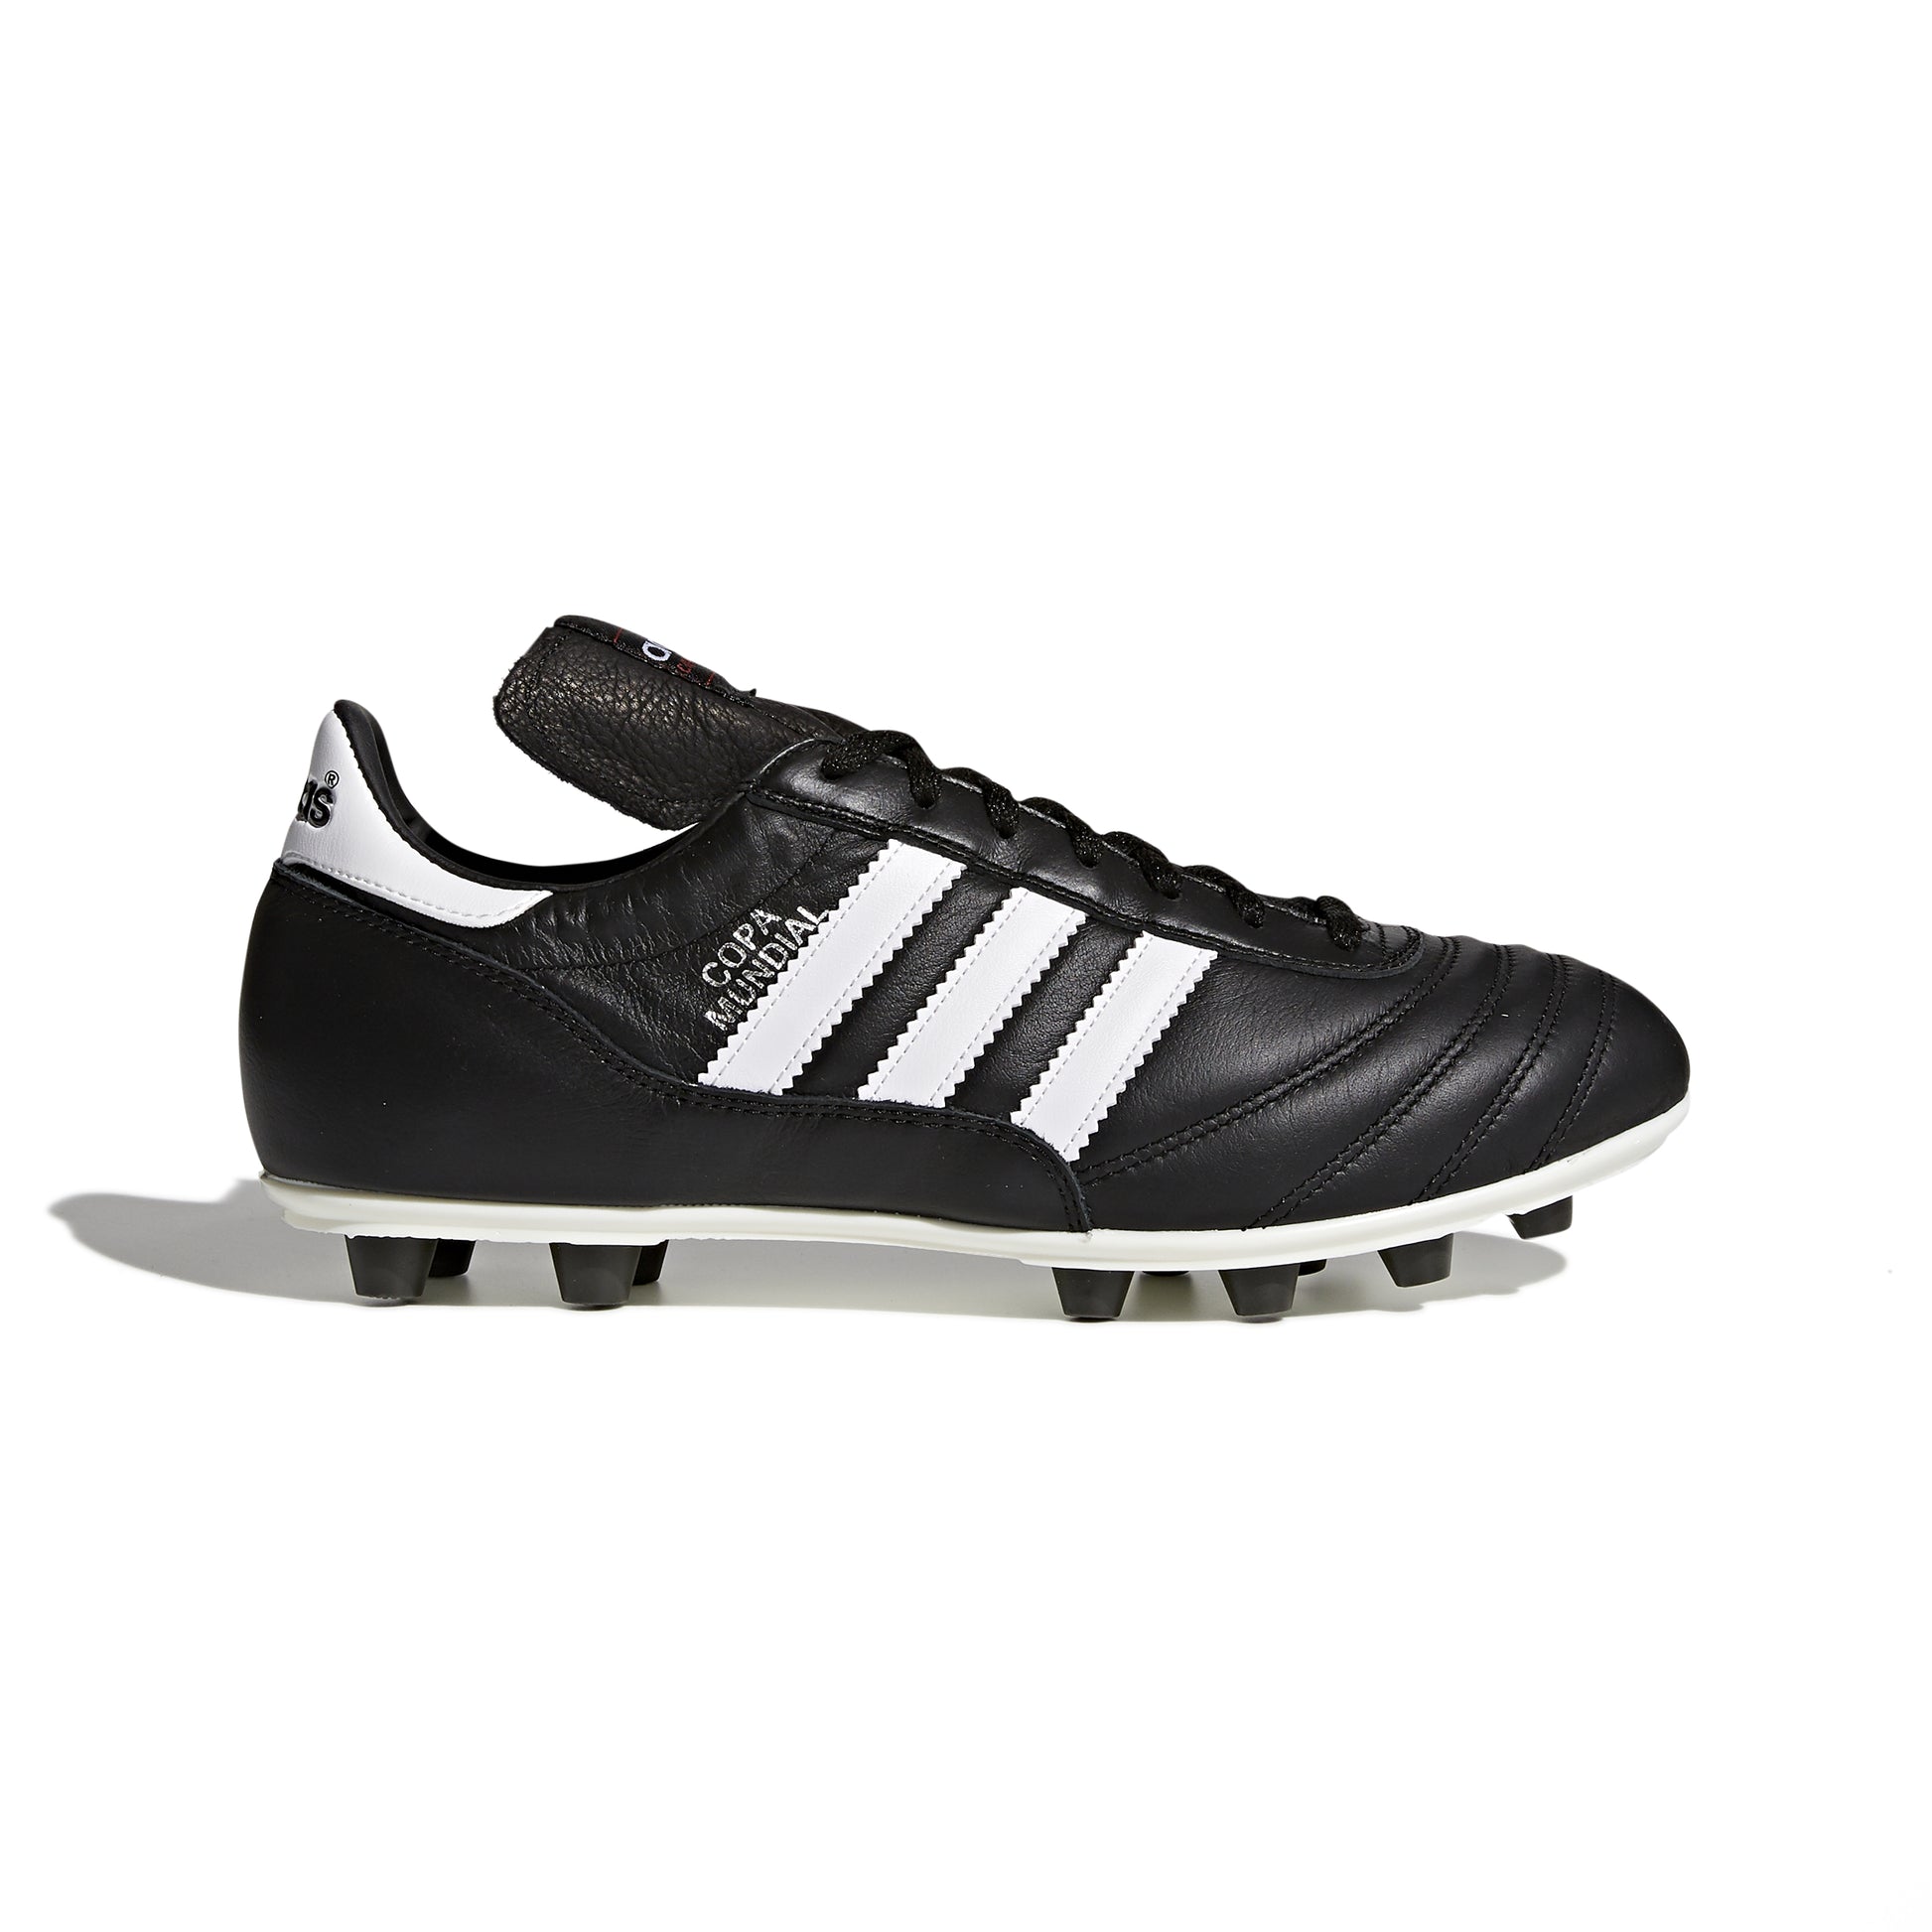 Adidas Copa Mundial FG Football Boots - Black - Queensferry Sports